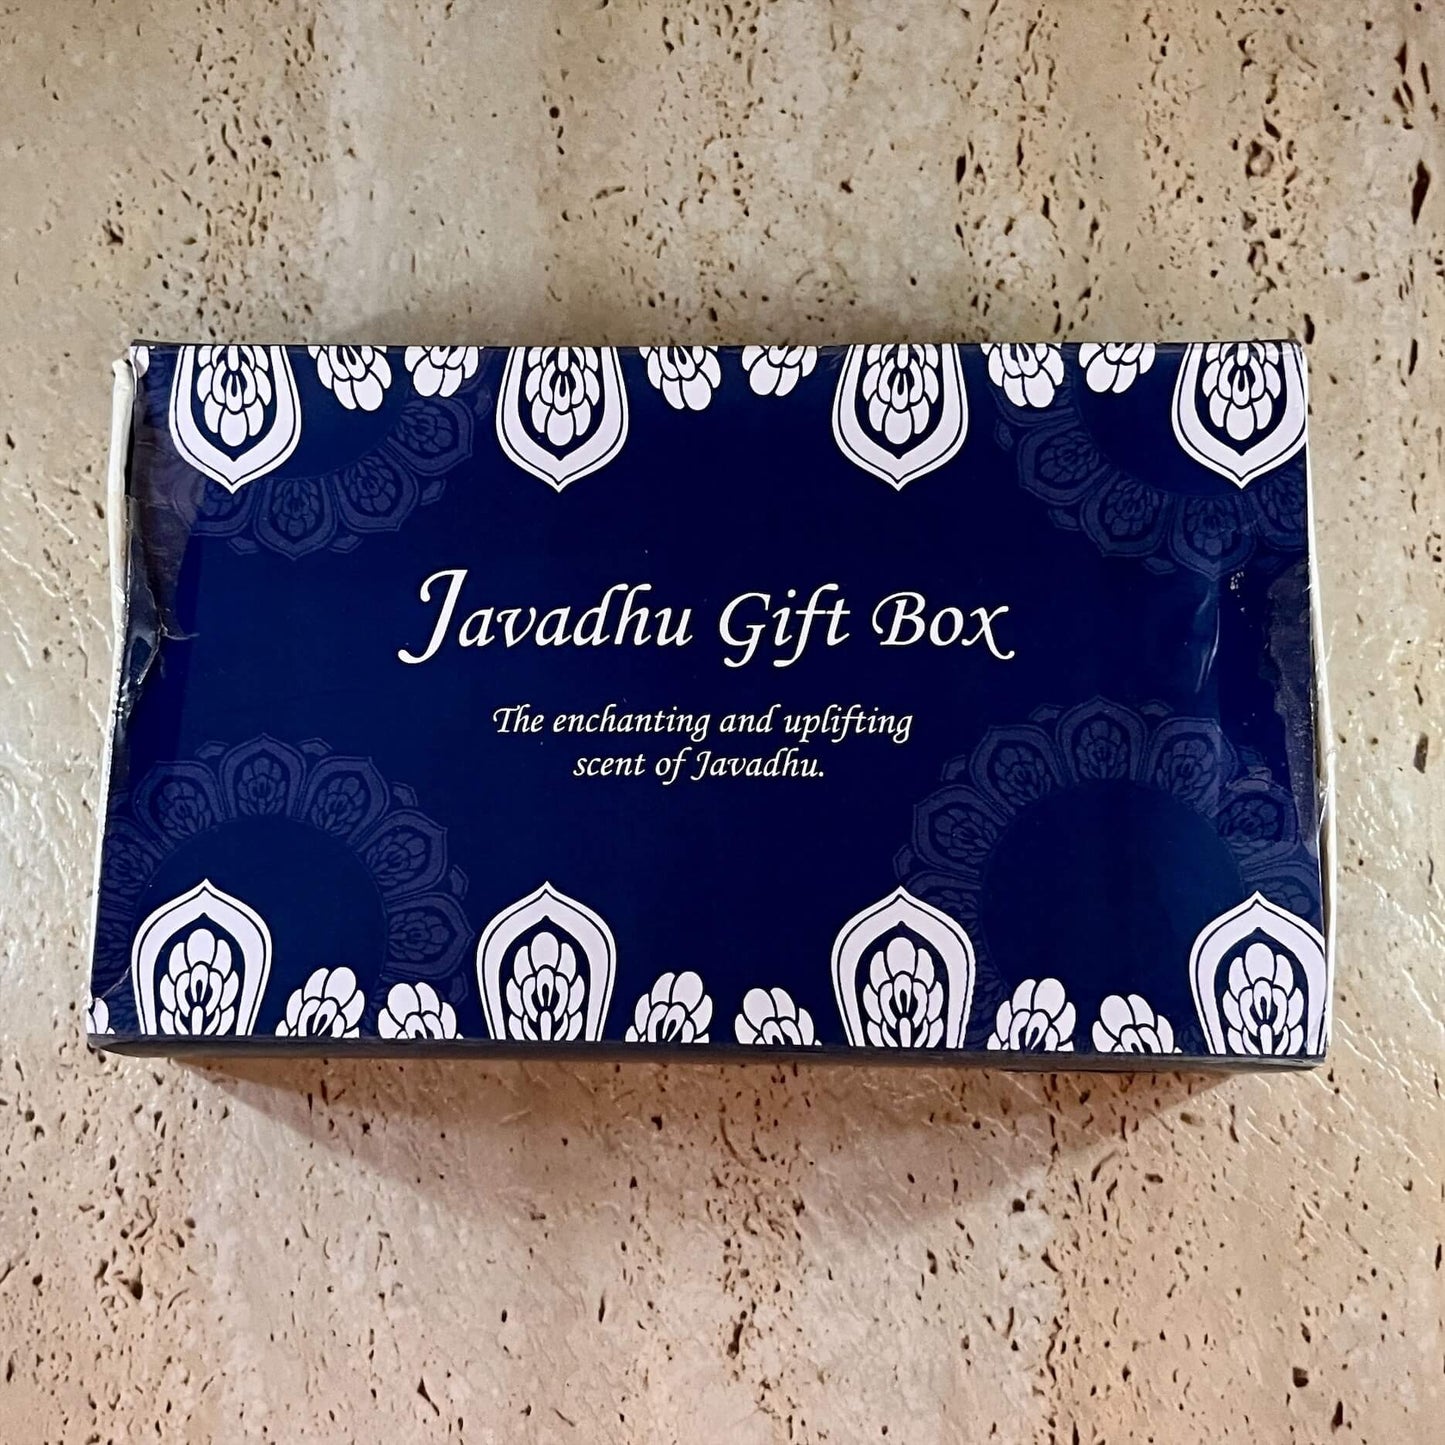 Javadhu gift box 7 items